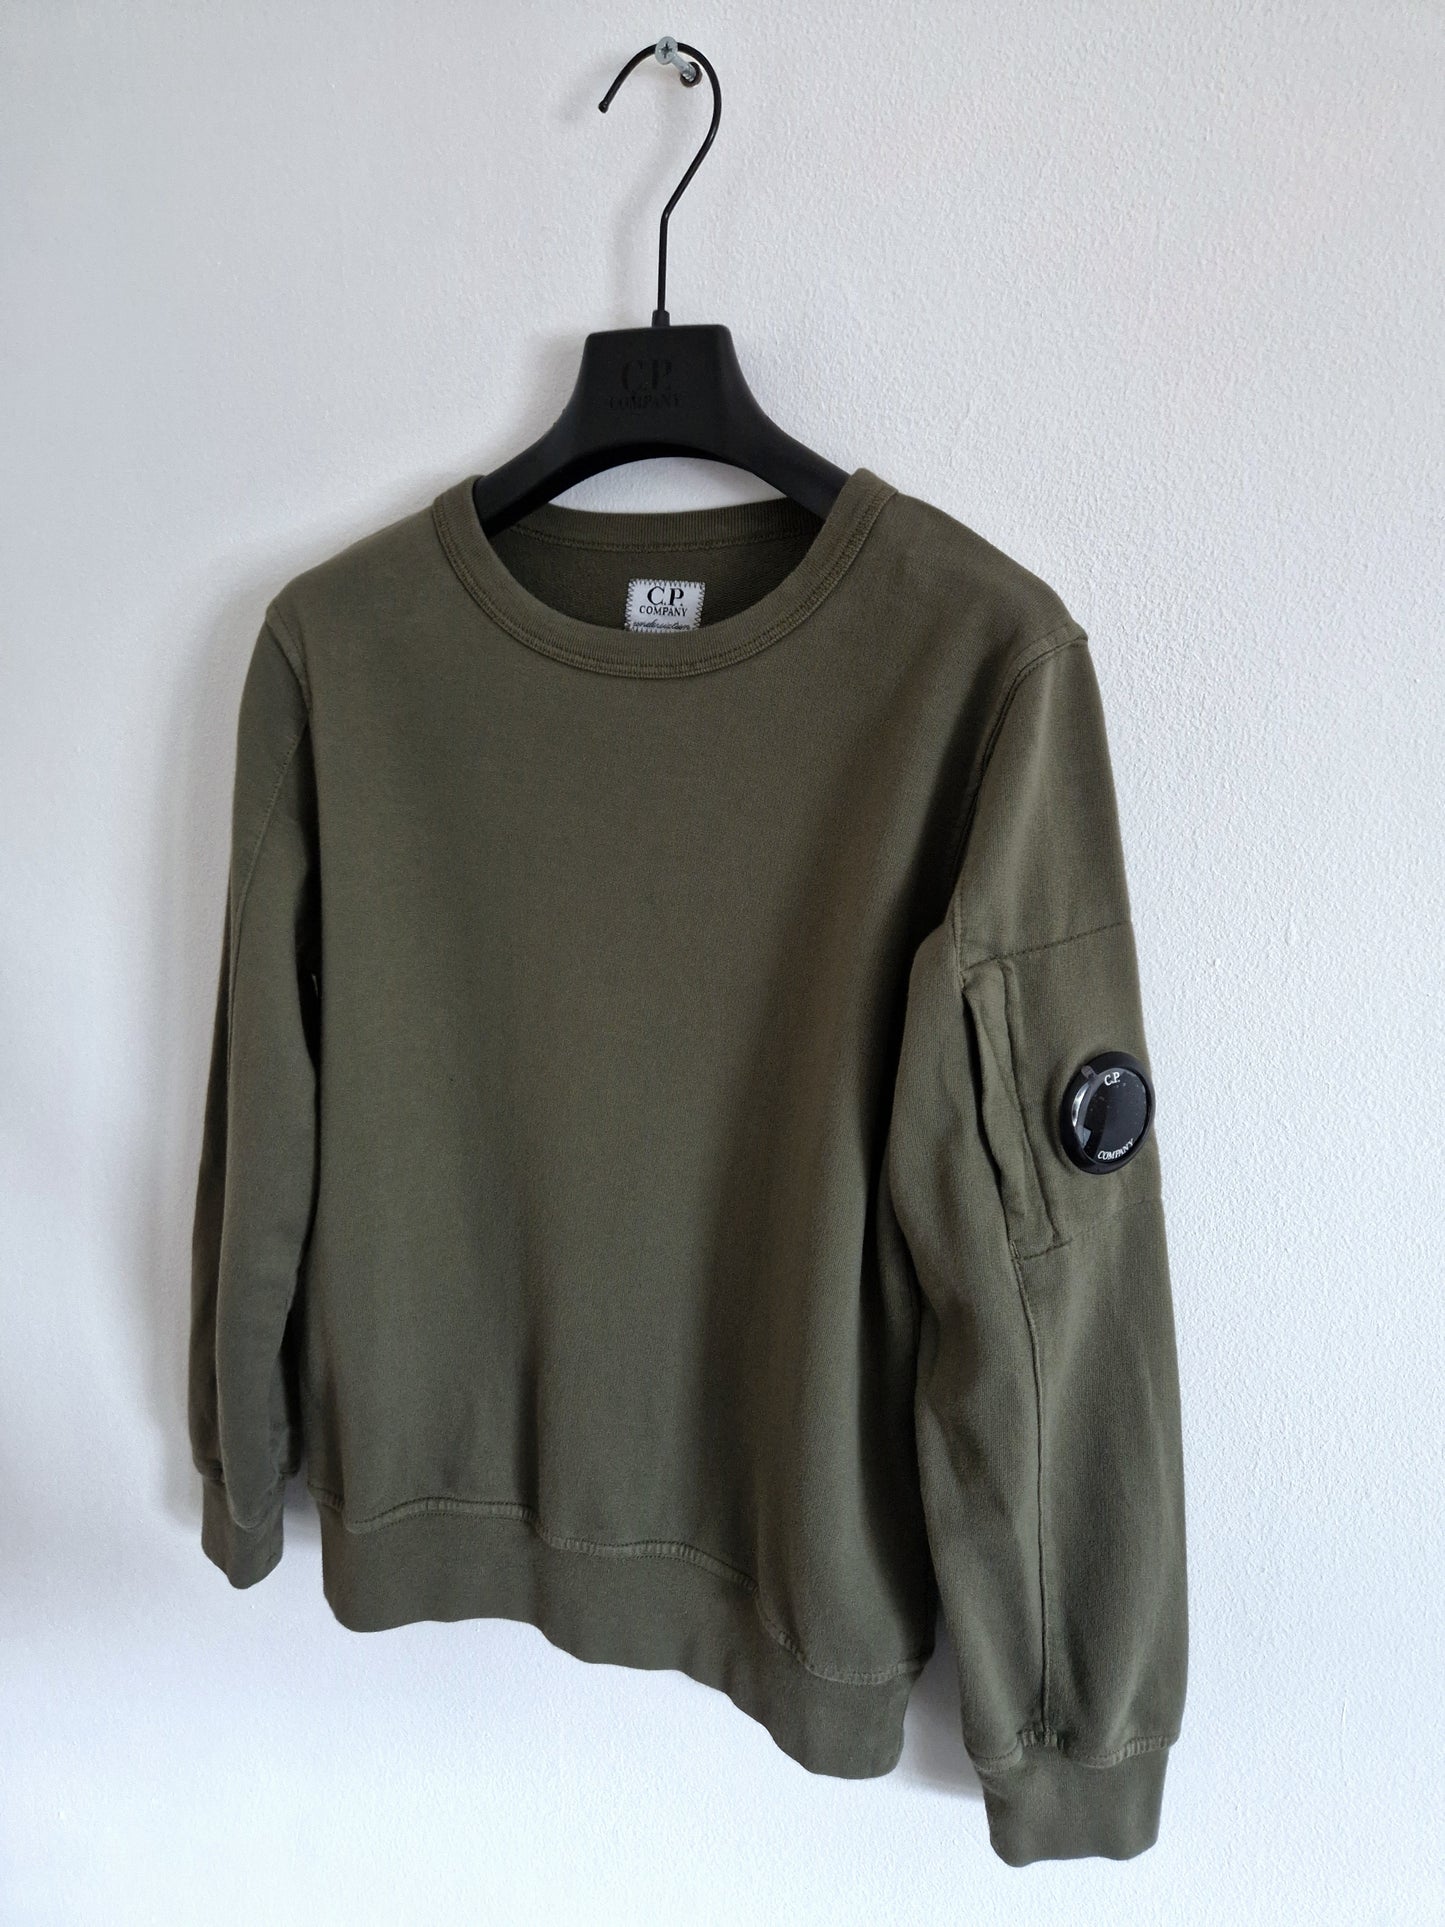 C.P. Company Junior Lightweight Sweatshirt - Olive